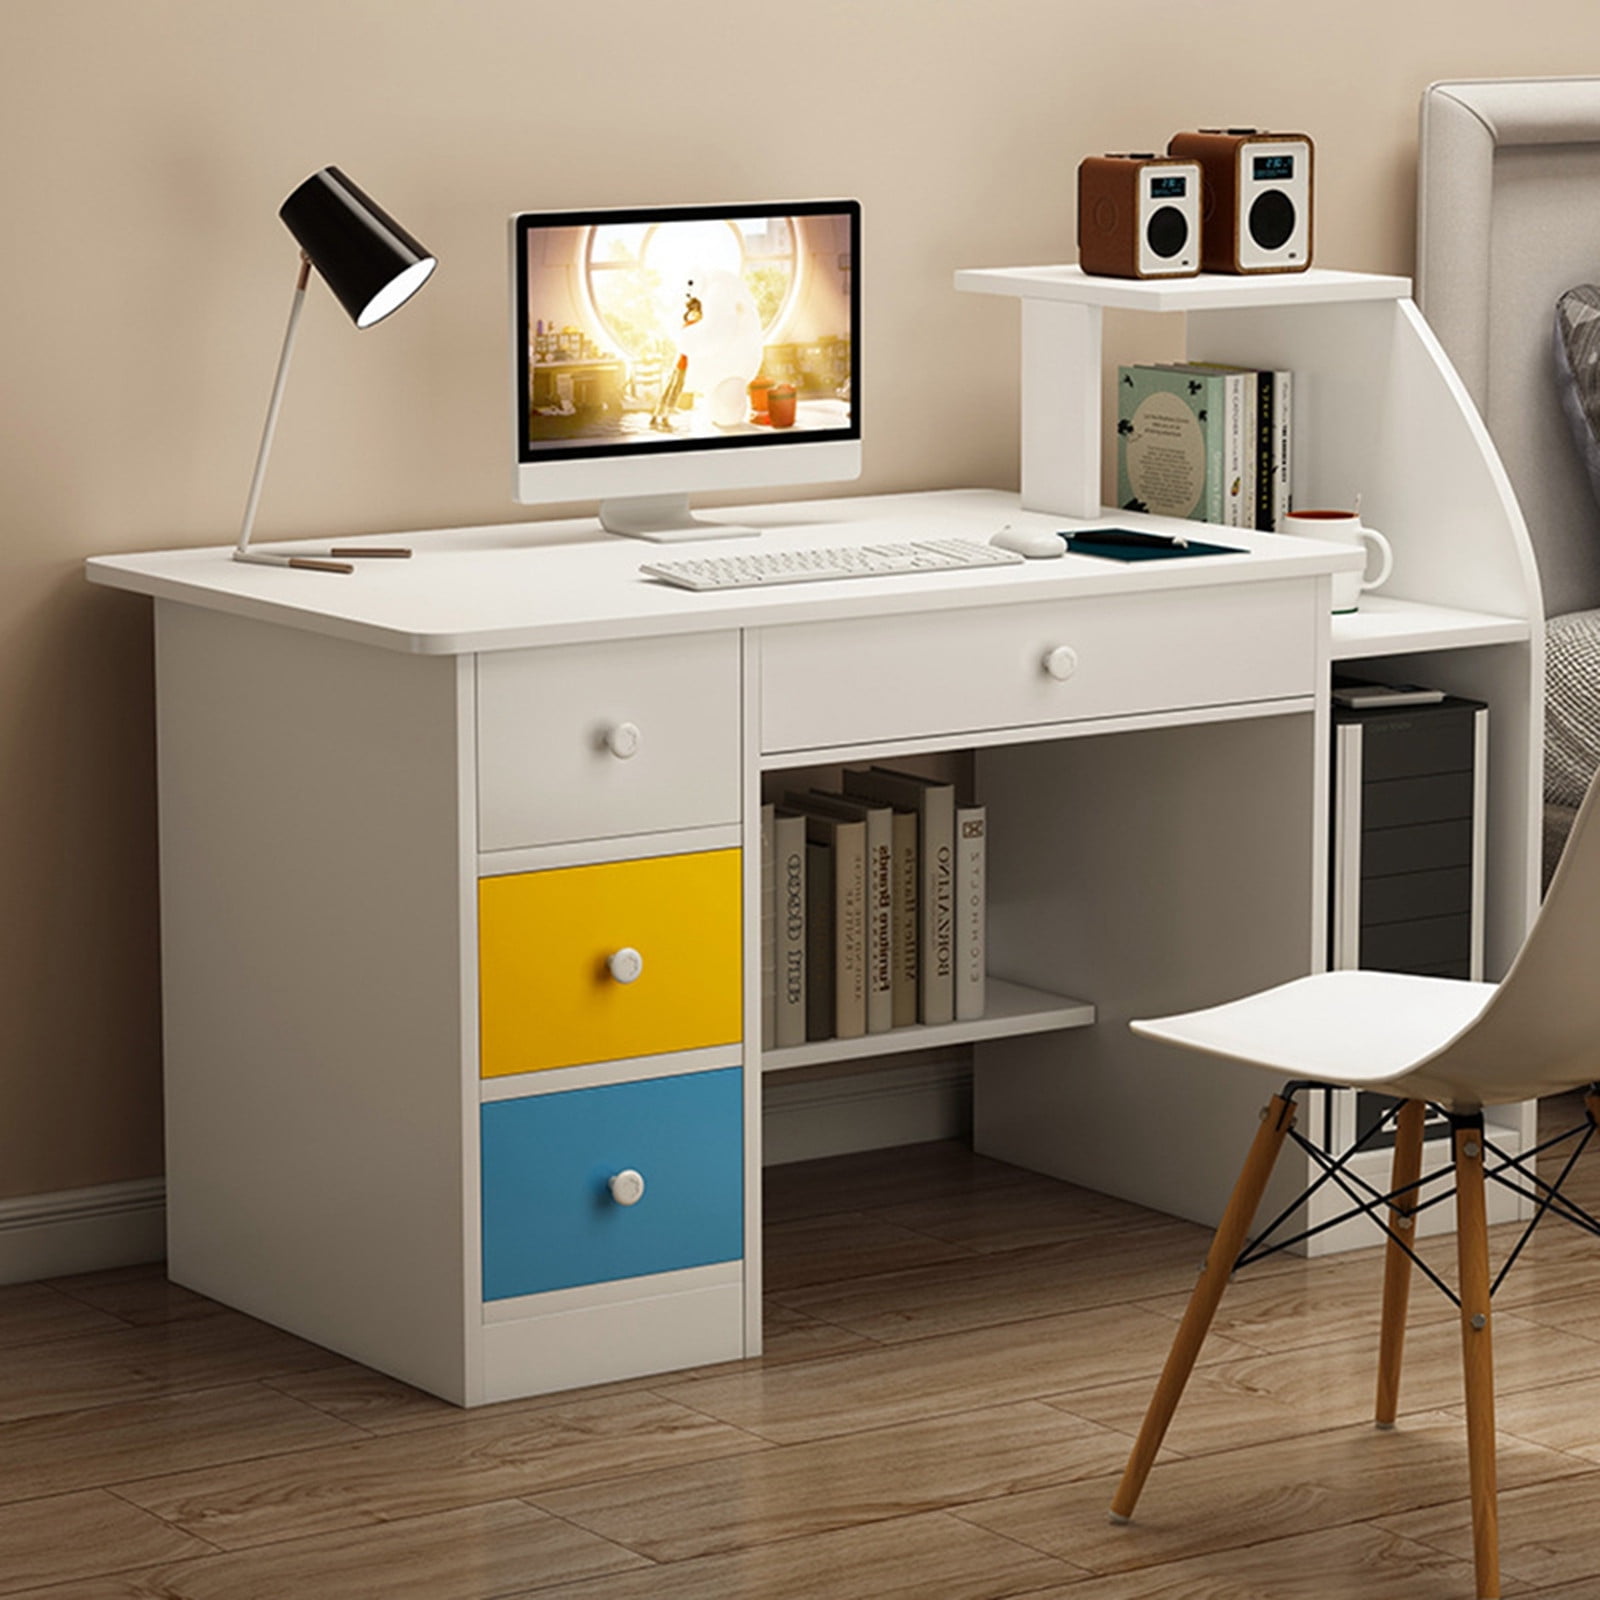 Details about   Modern Office Desk Computer Desk W/Drawer Shelf Laptop Home Small Desk Table 